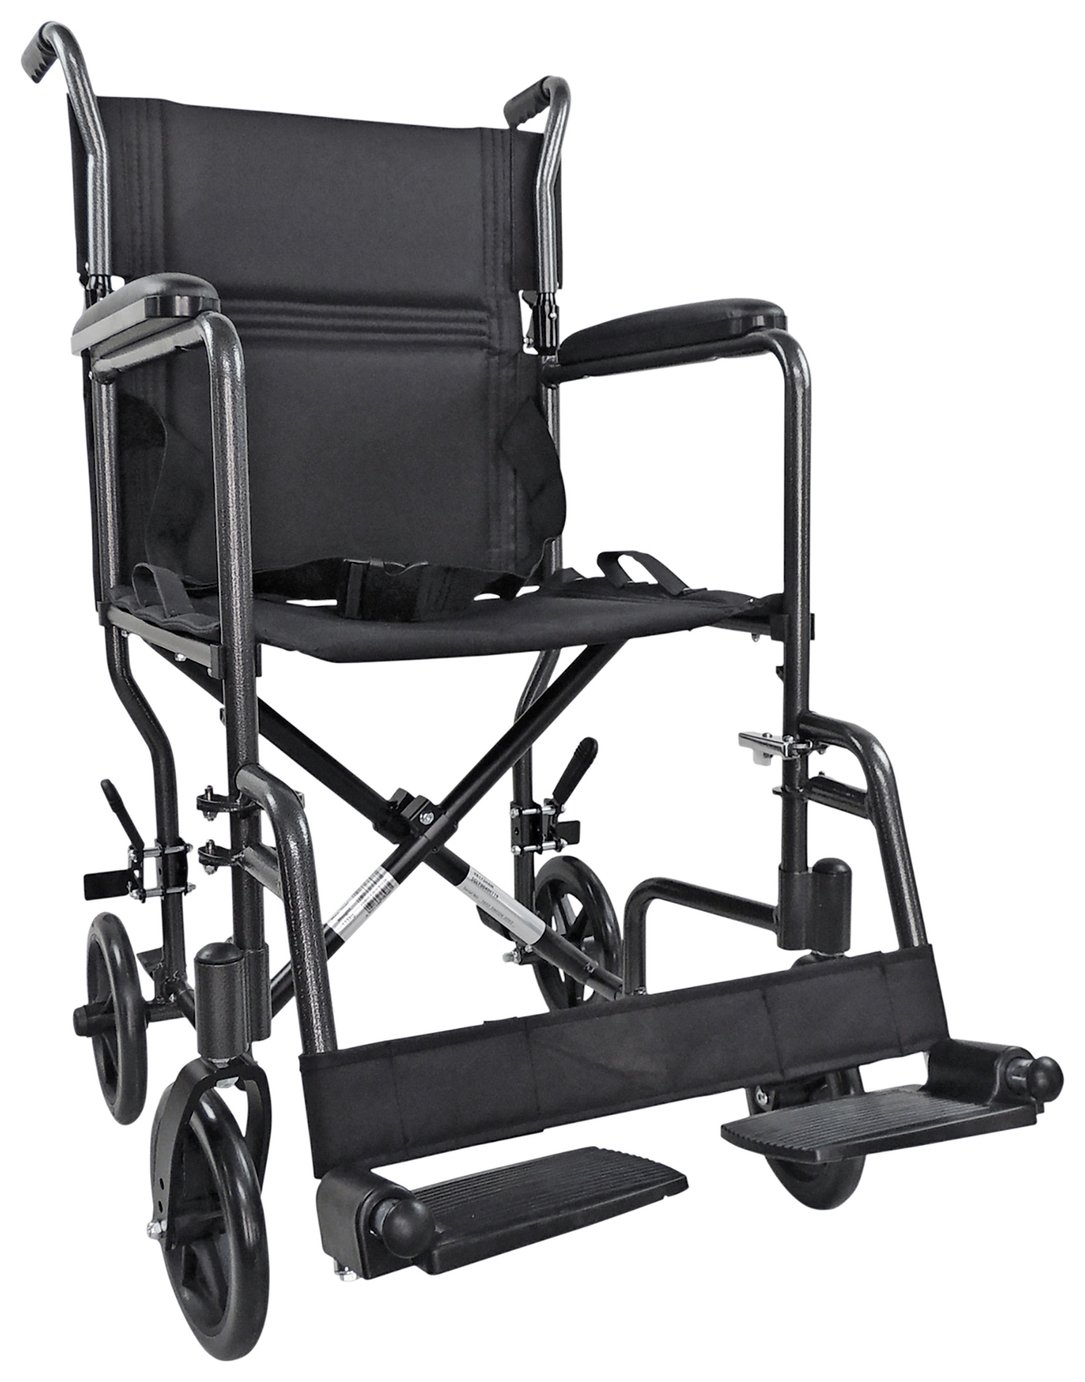 Aidapt Compact and Lightweight Aluminium Travel Wheelchair Review